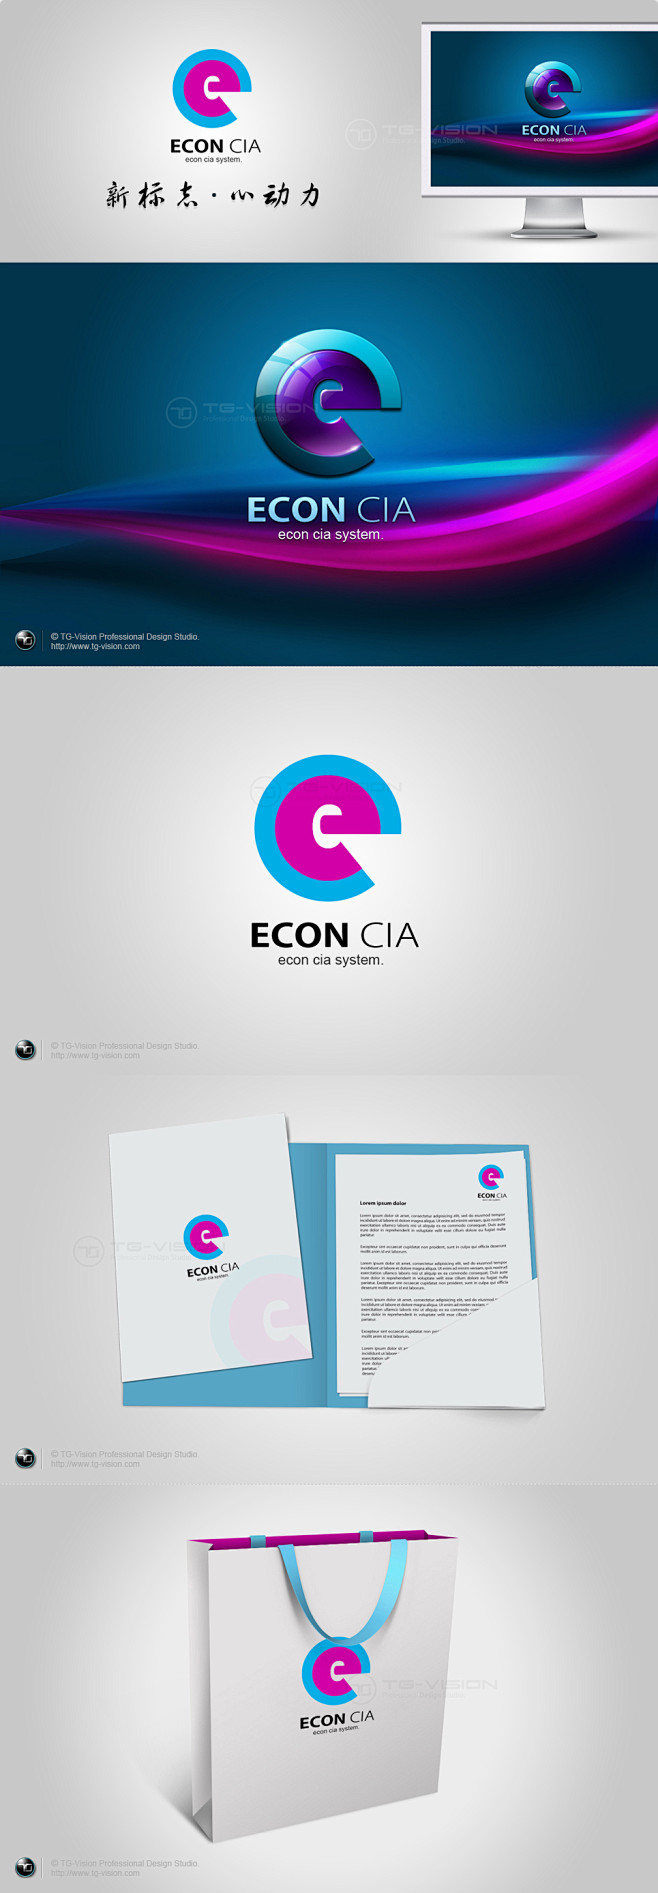 Econ CIA 品牌Logo设计